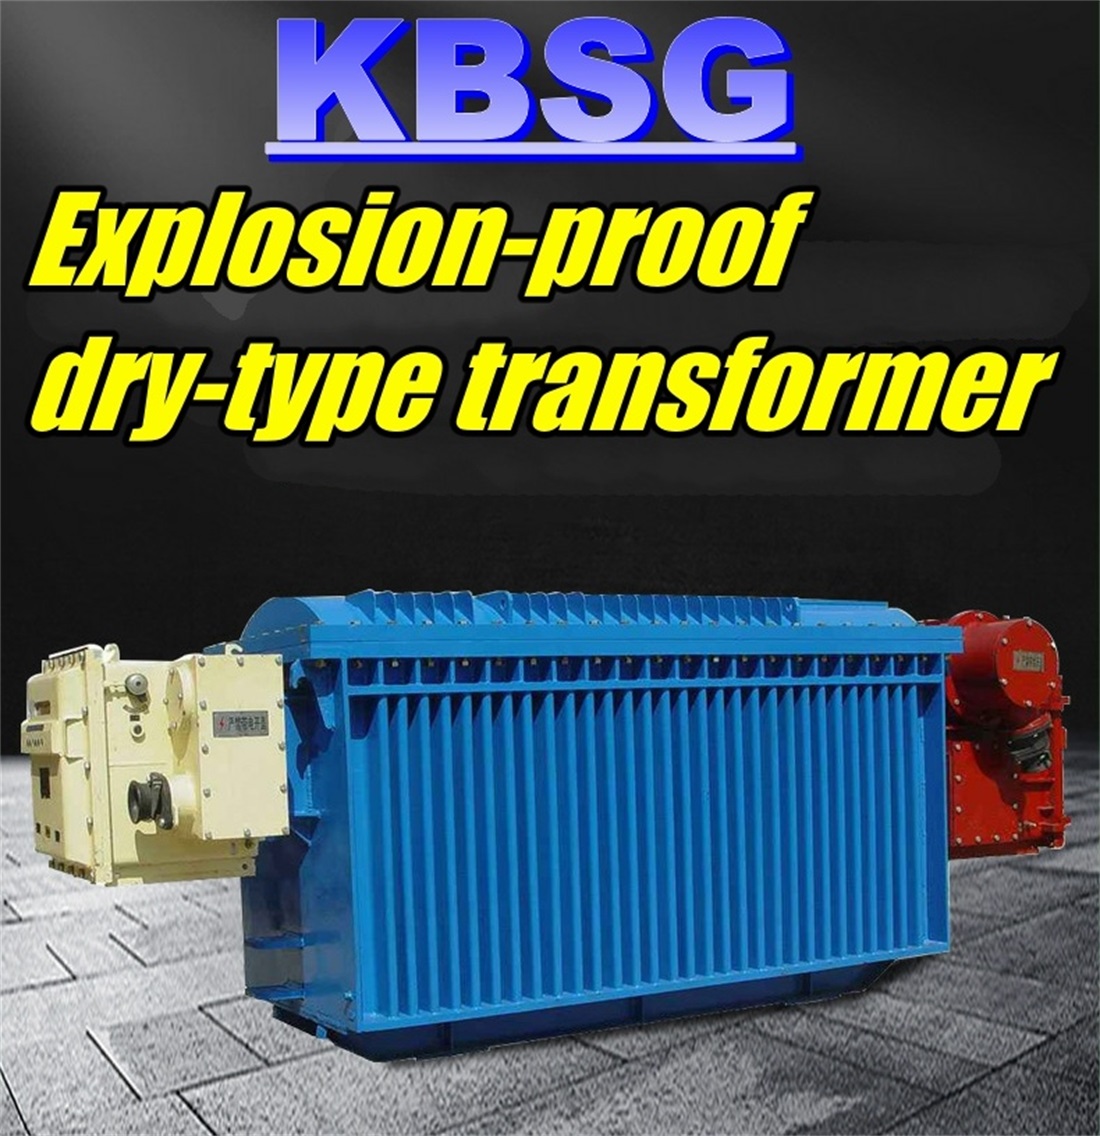 https://www.ckcele.com/kbsg-6-10kv-50-4000kva-dry-type-explosion-proof-transformer-for-mine-tunnel-product/